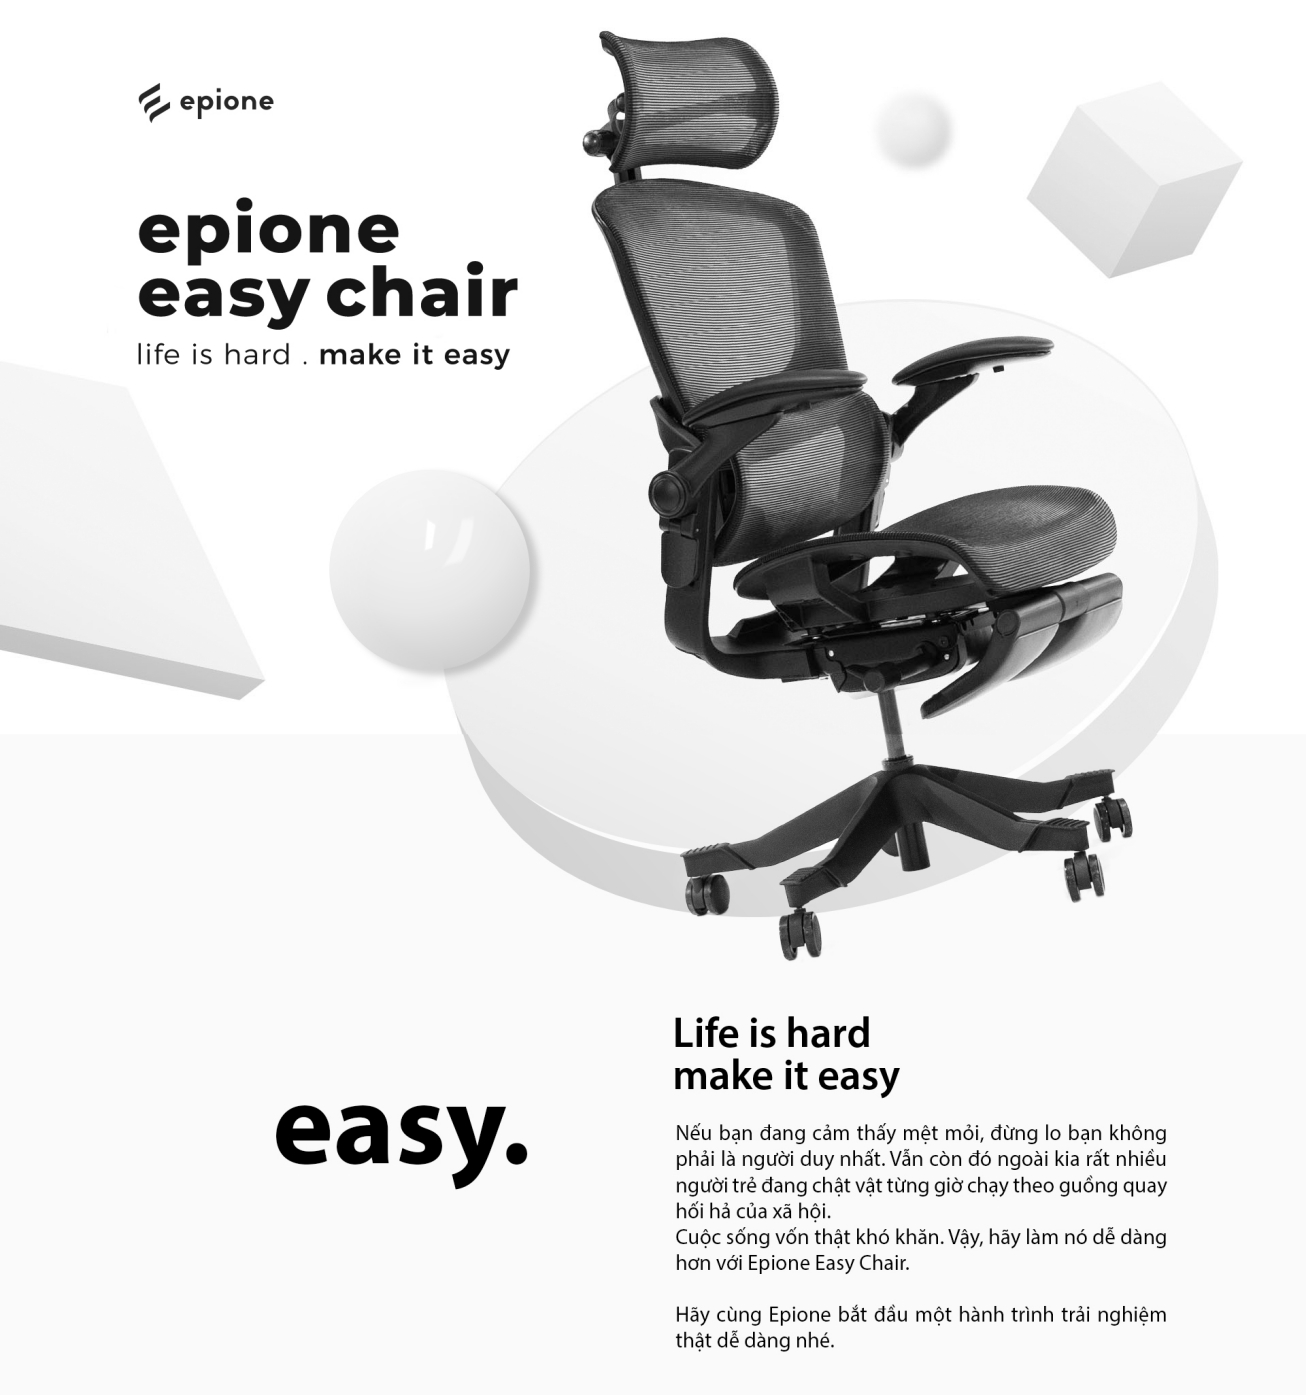 Epione Easy Chair - Make it Easy